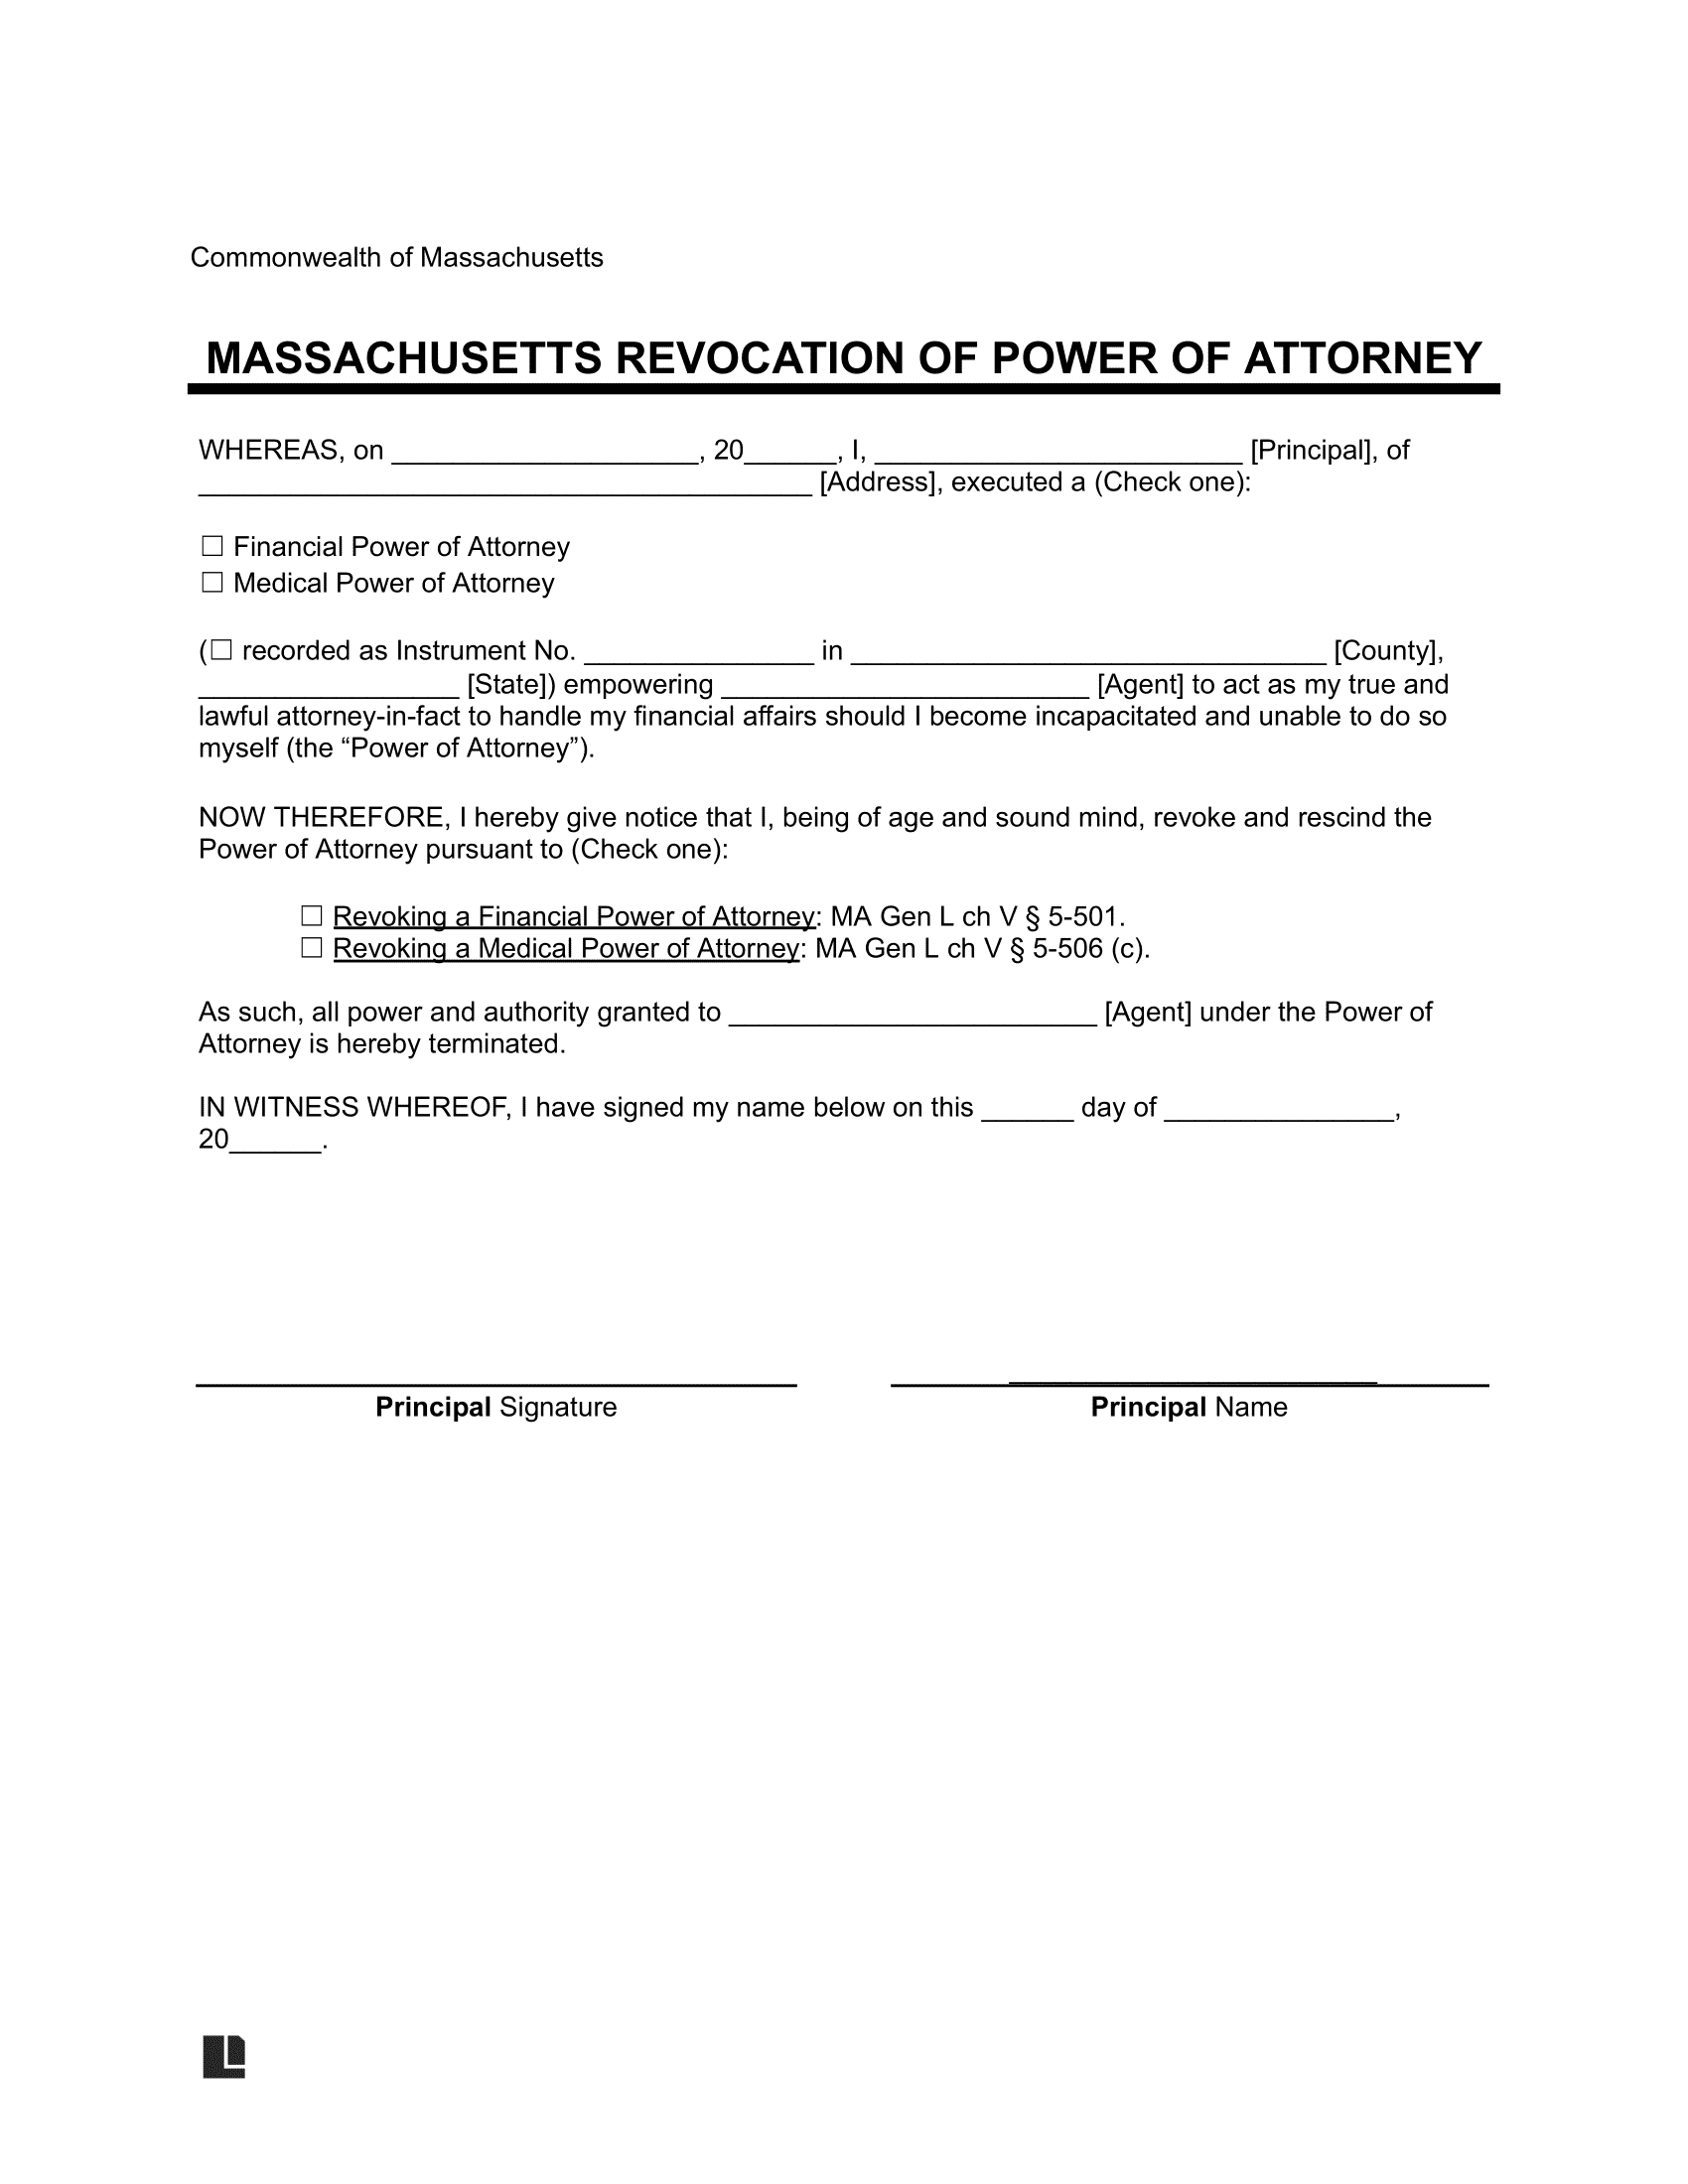 Massachusetts Revocation of Power of Attorney Form